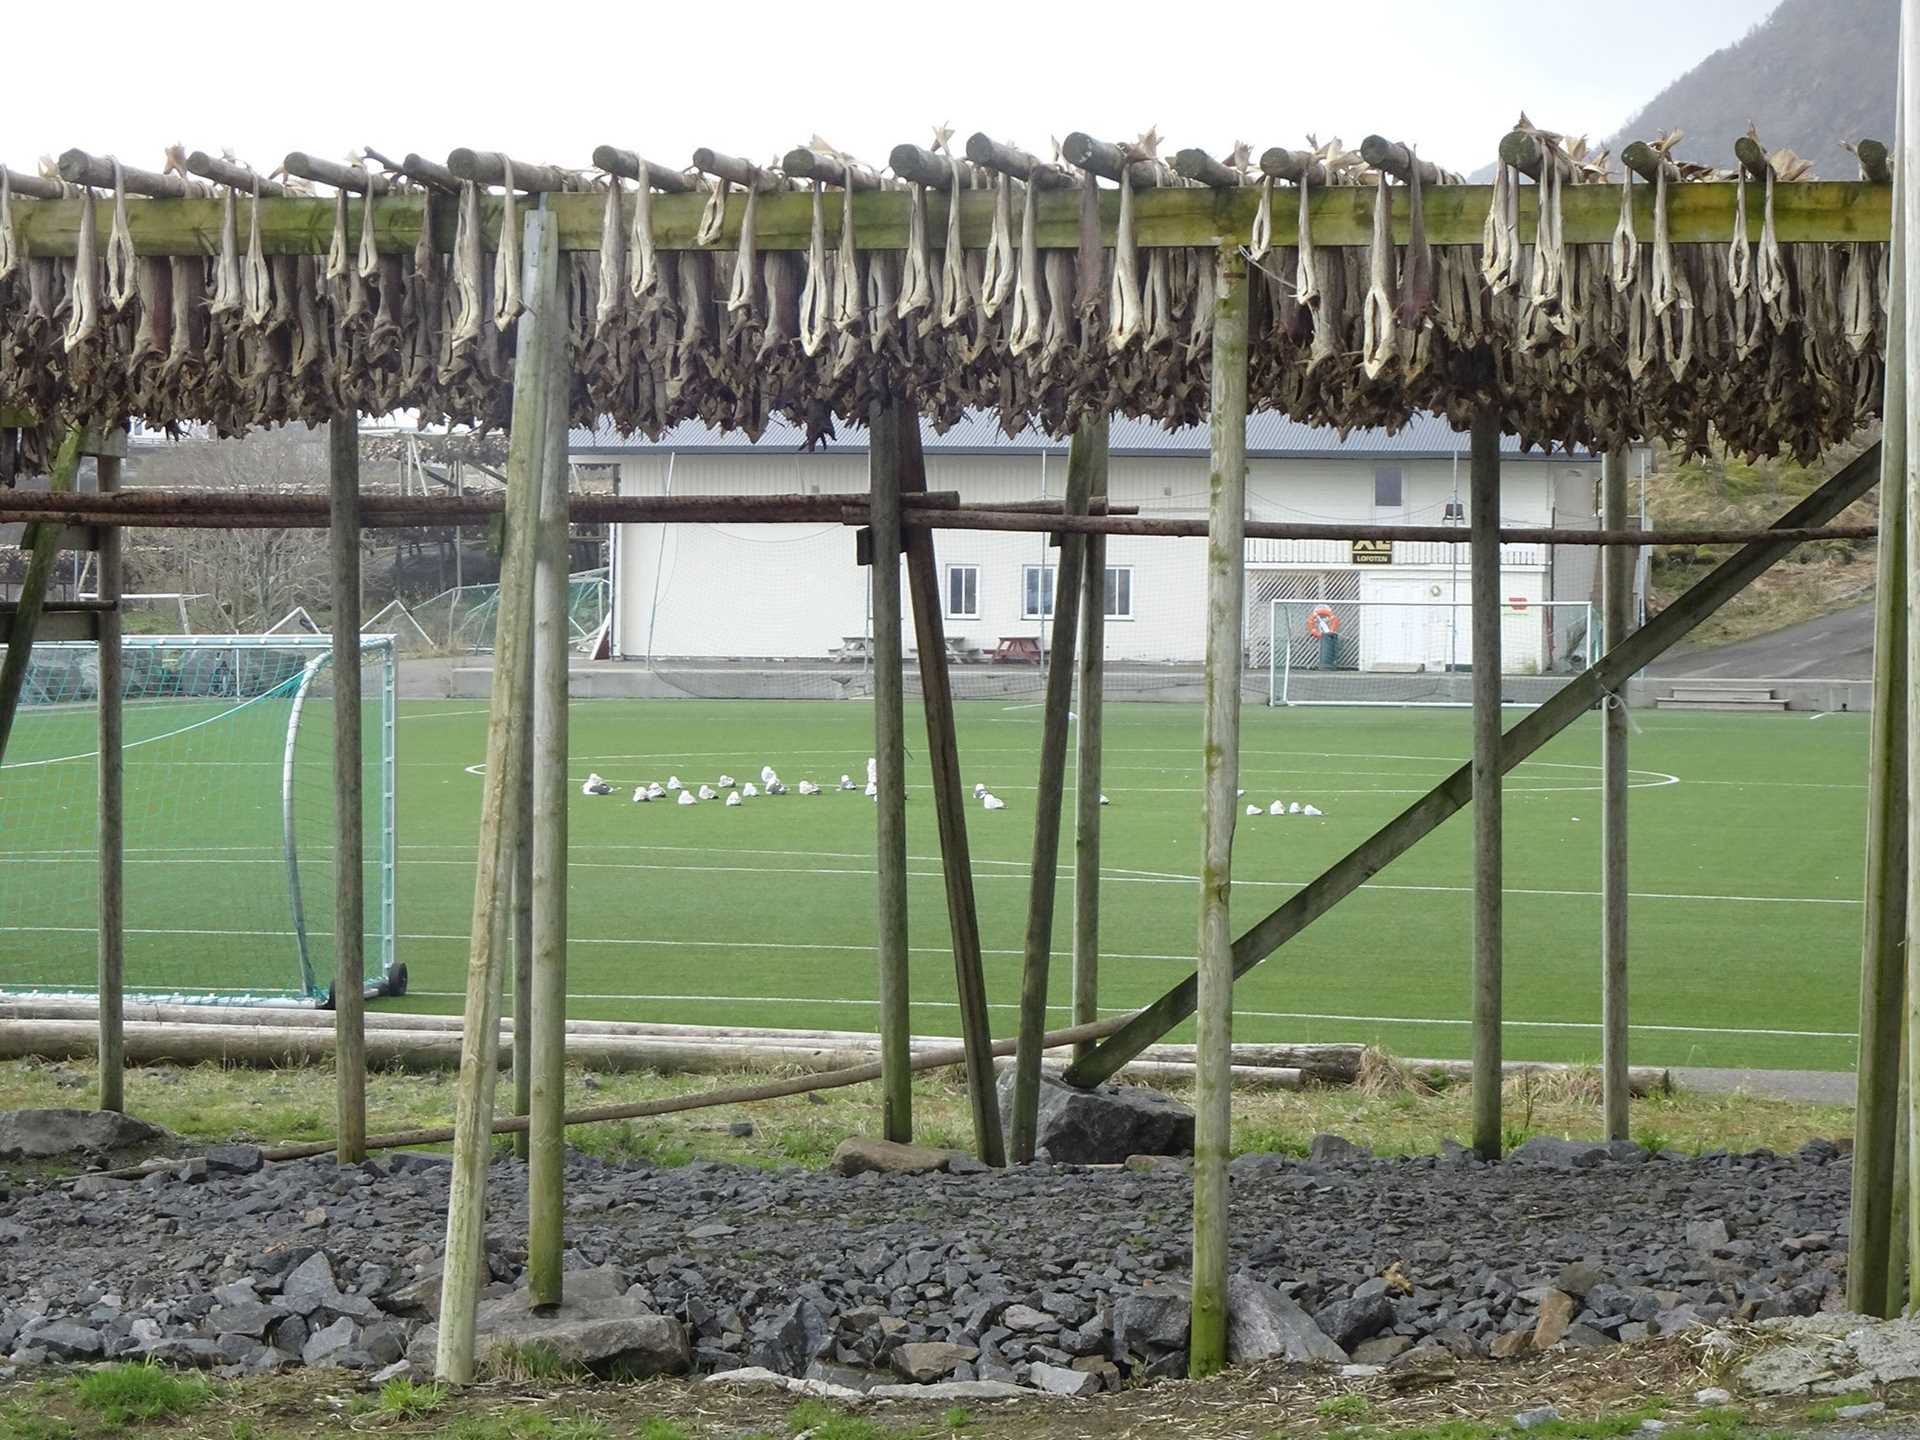 birds resting on a soccer field